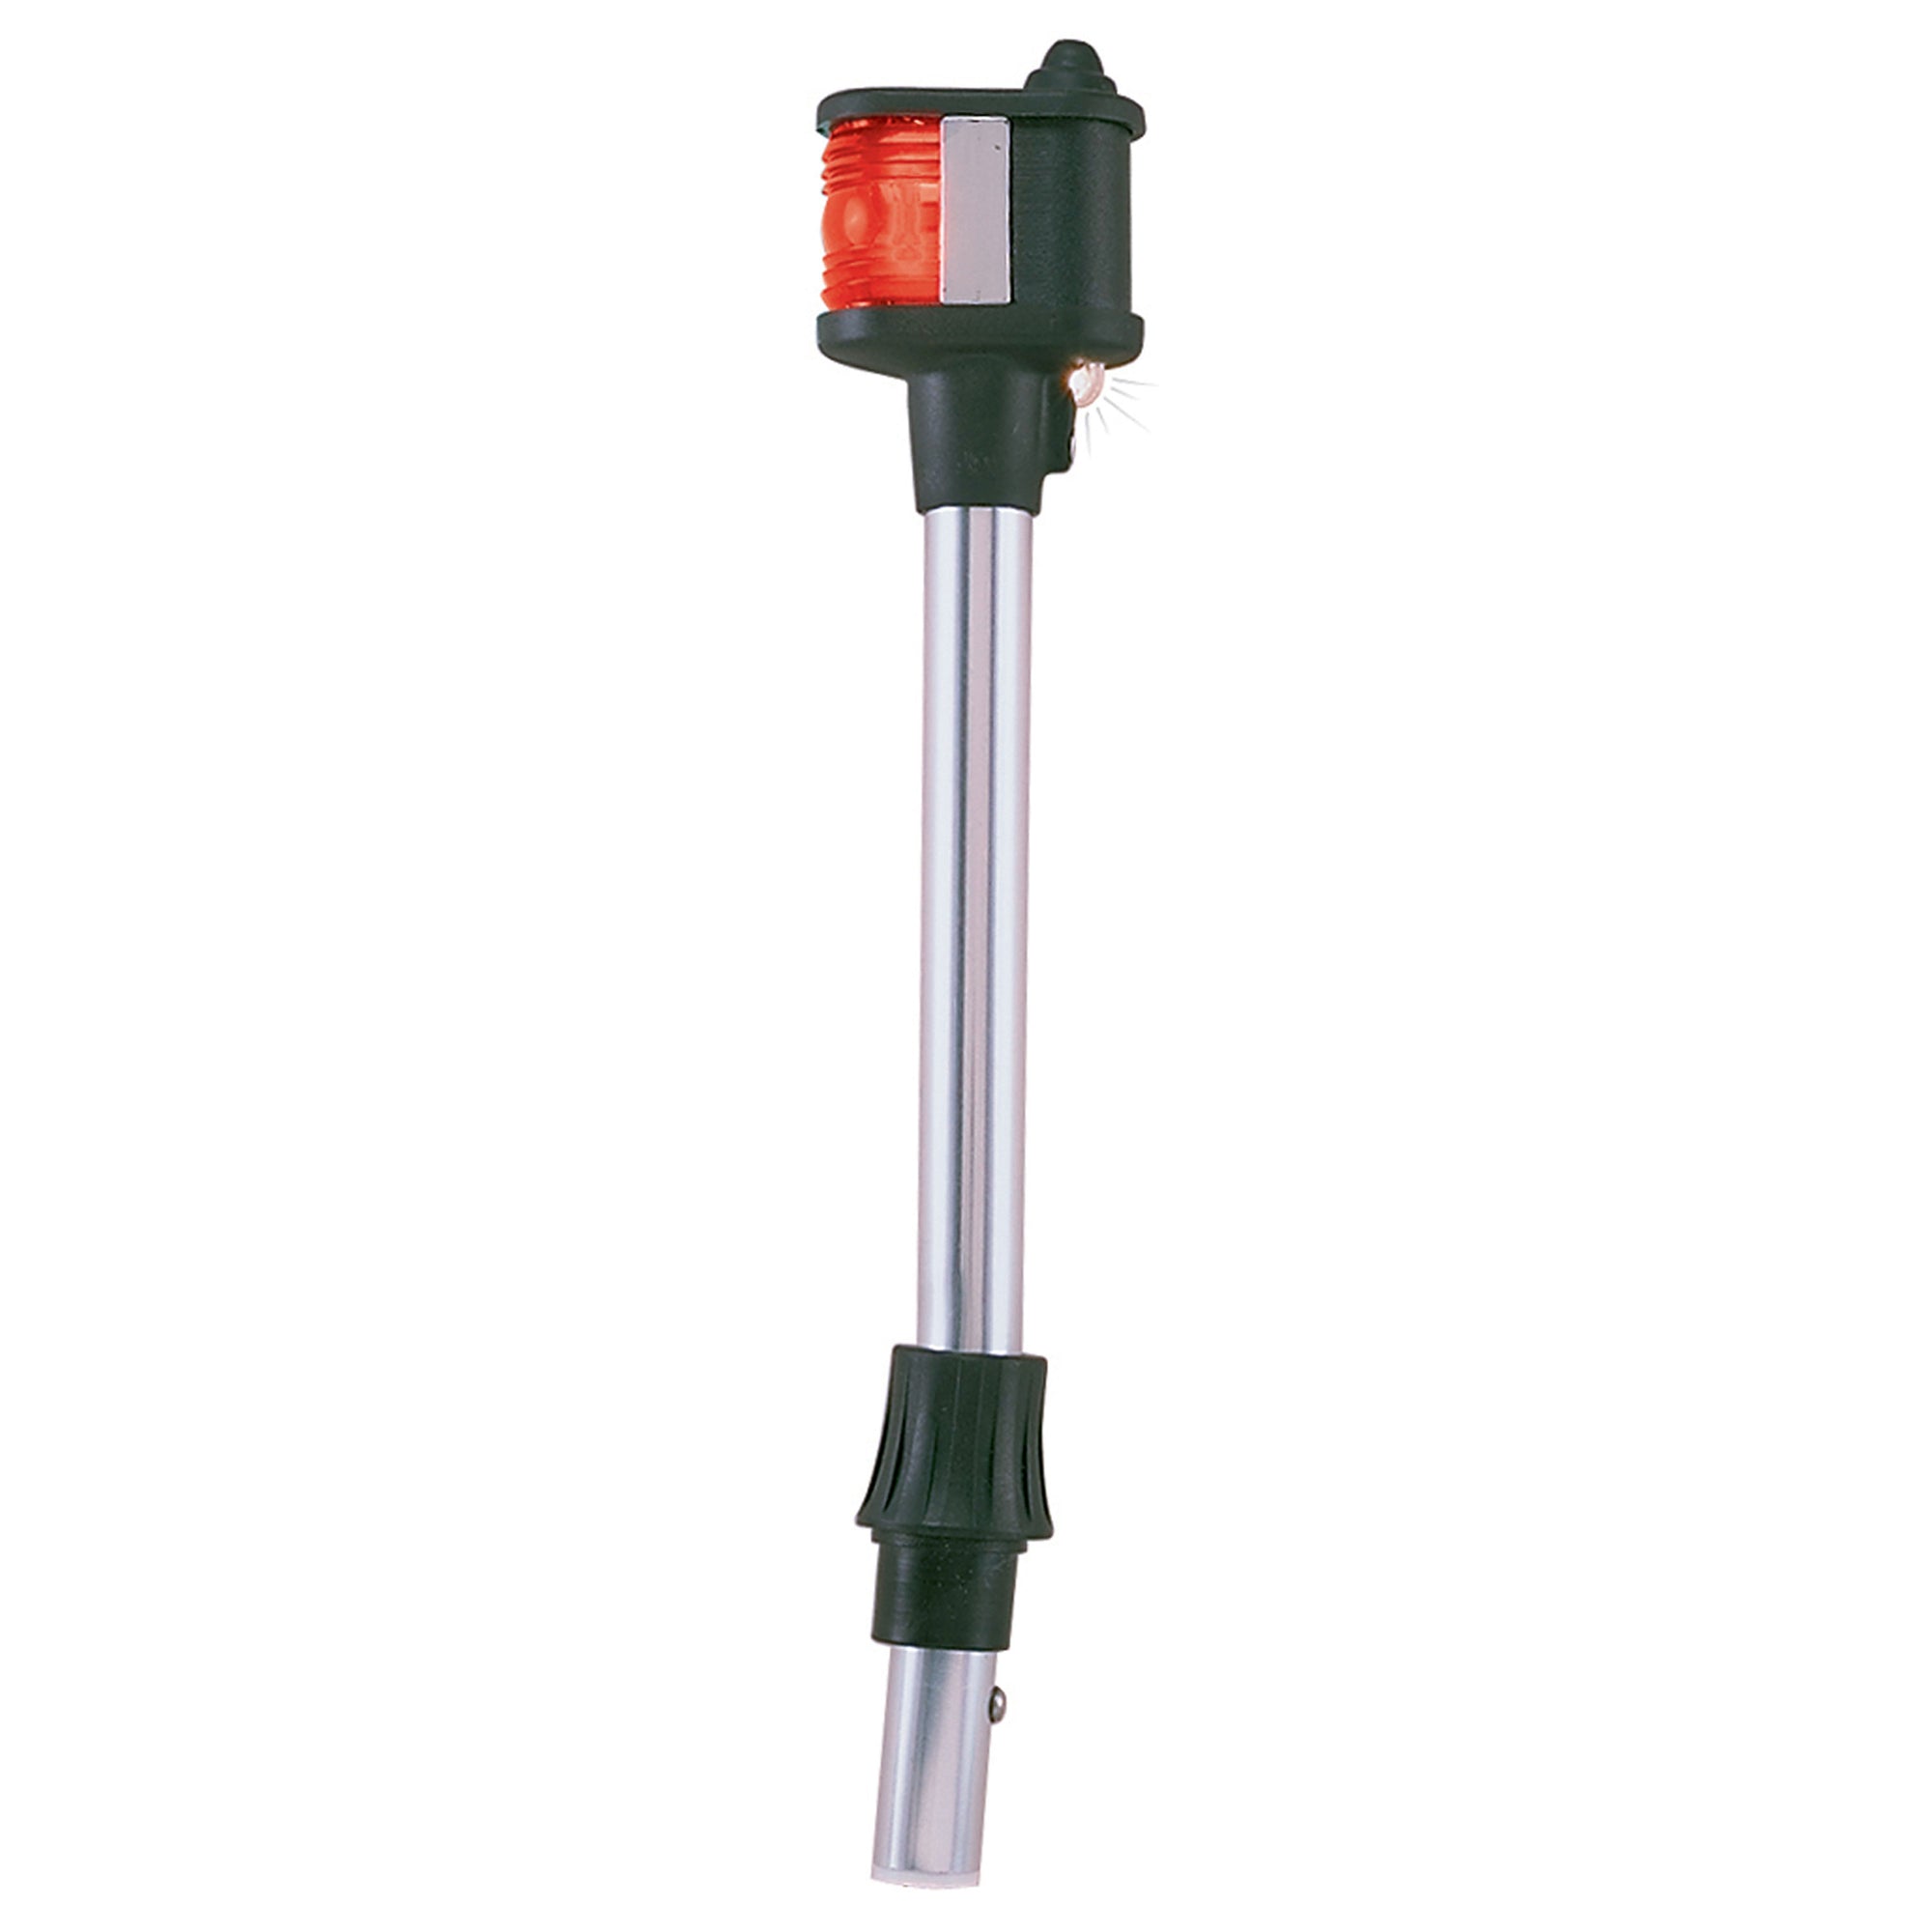 Perko 1212DP2CHR Removable Plug-In Bi-Color Pole/Utility Light for 5° Base Rake - 12-1/2" Height x 3/4" Diameter